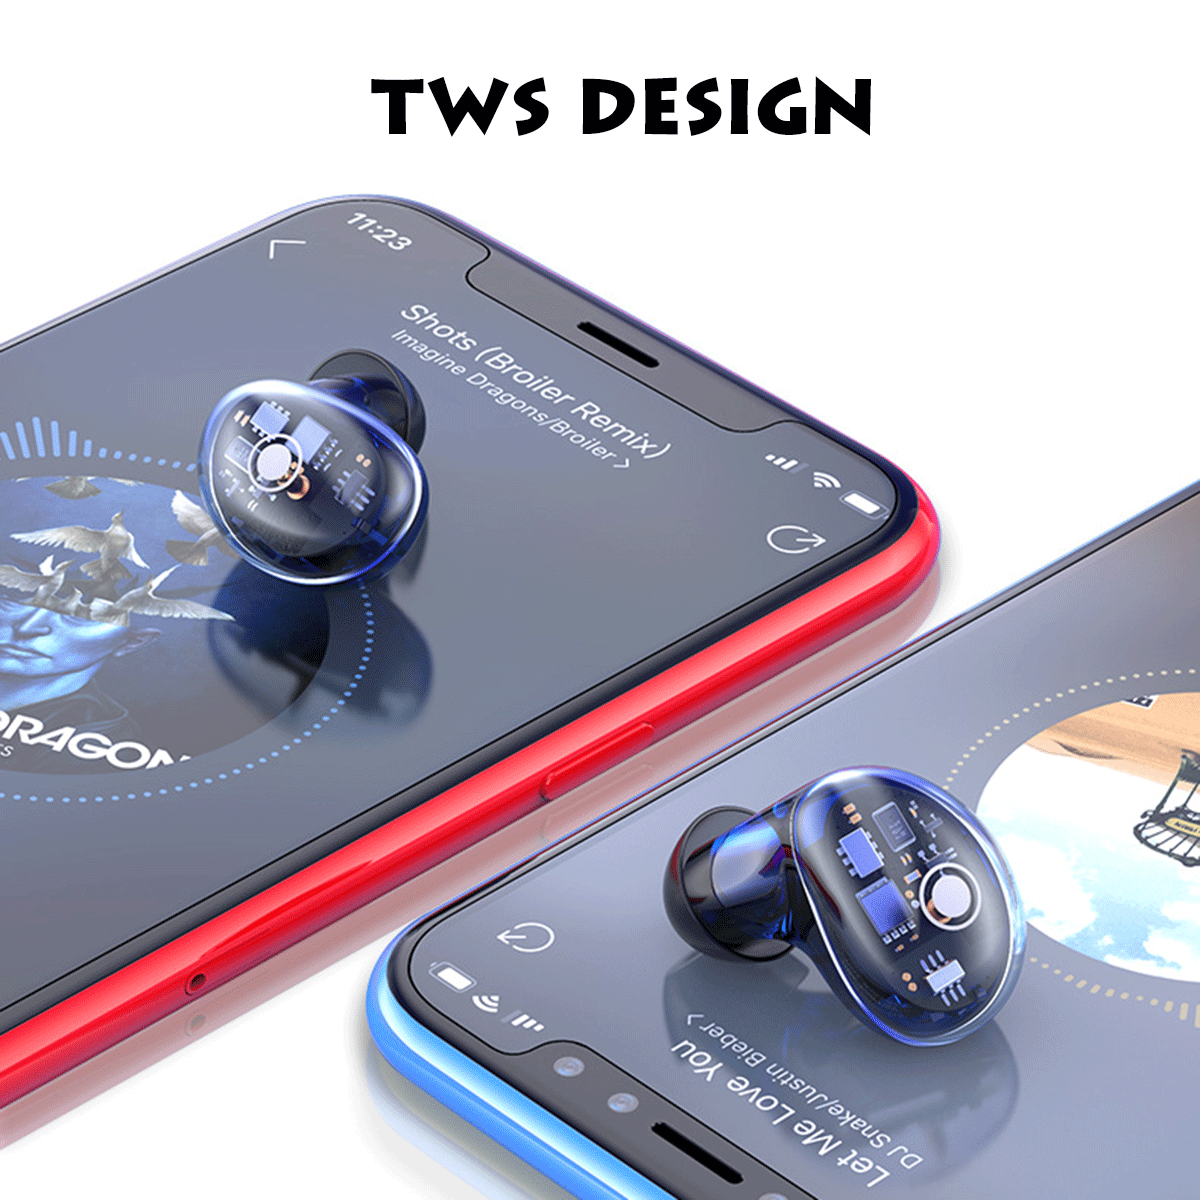 X7-TWS-Touch-bluetooth-50-Earphone-Digital-Display-Hifi-Stereo-Auto-Pair-IPX6-Waterproof-Headset-wit-1573130-4